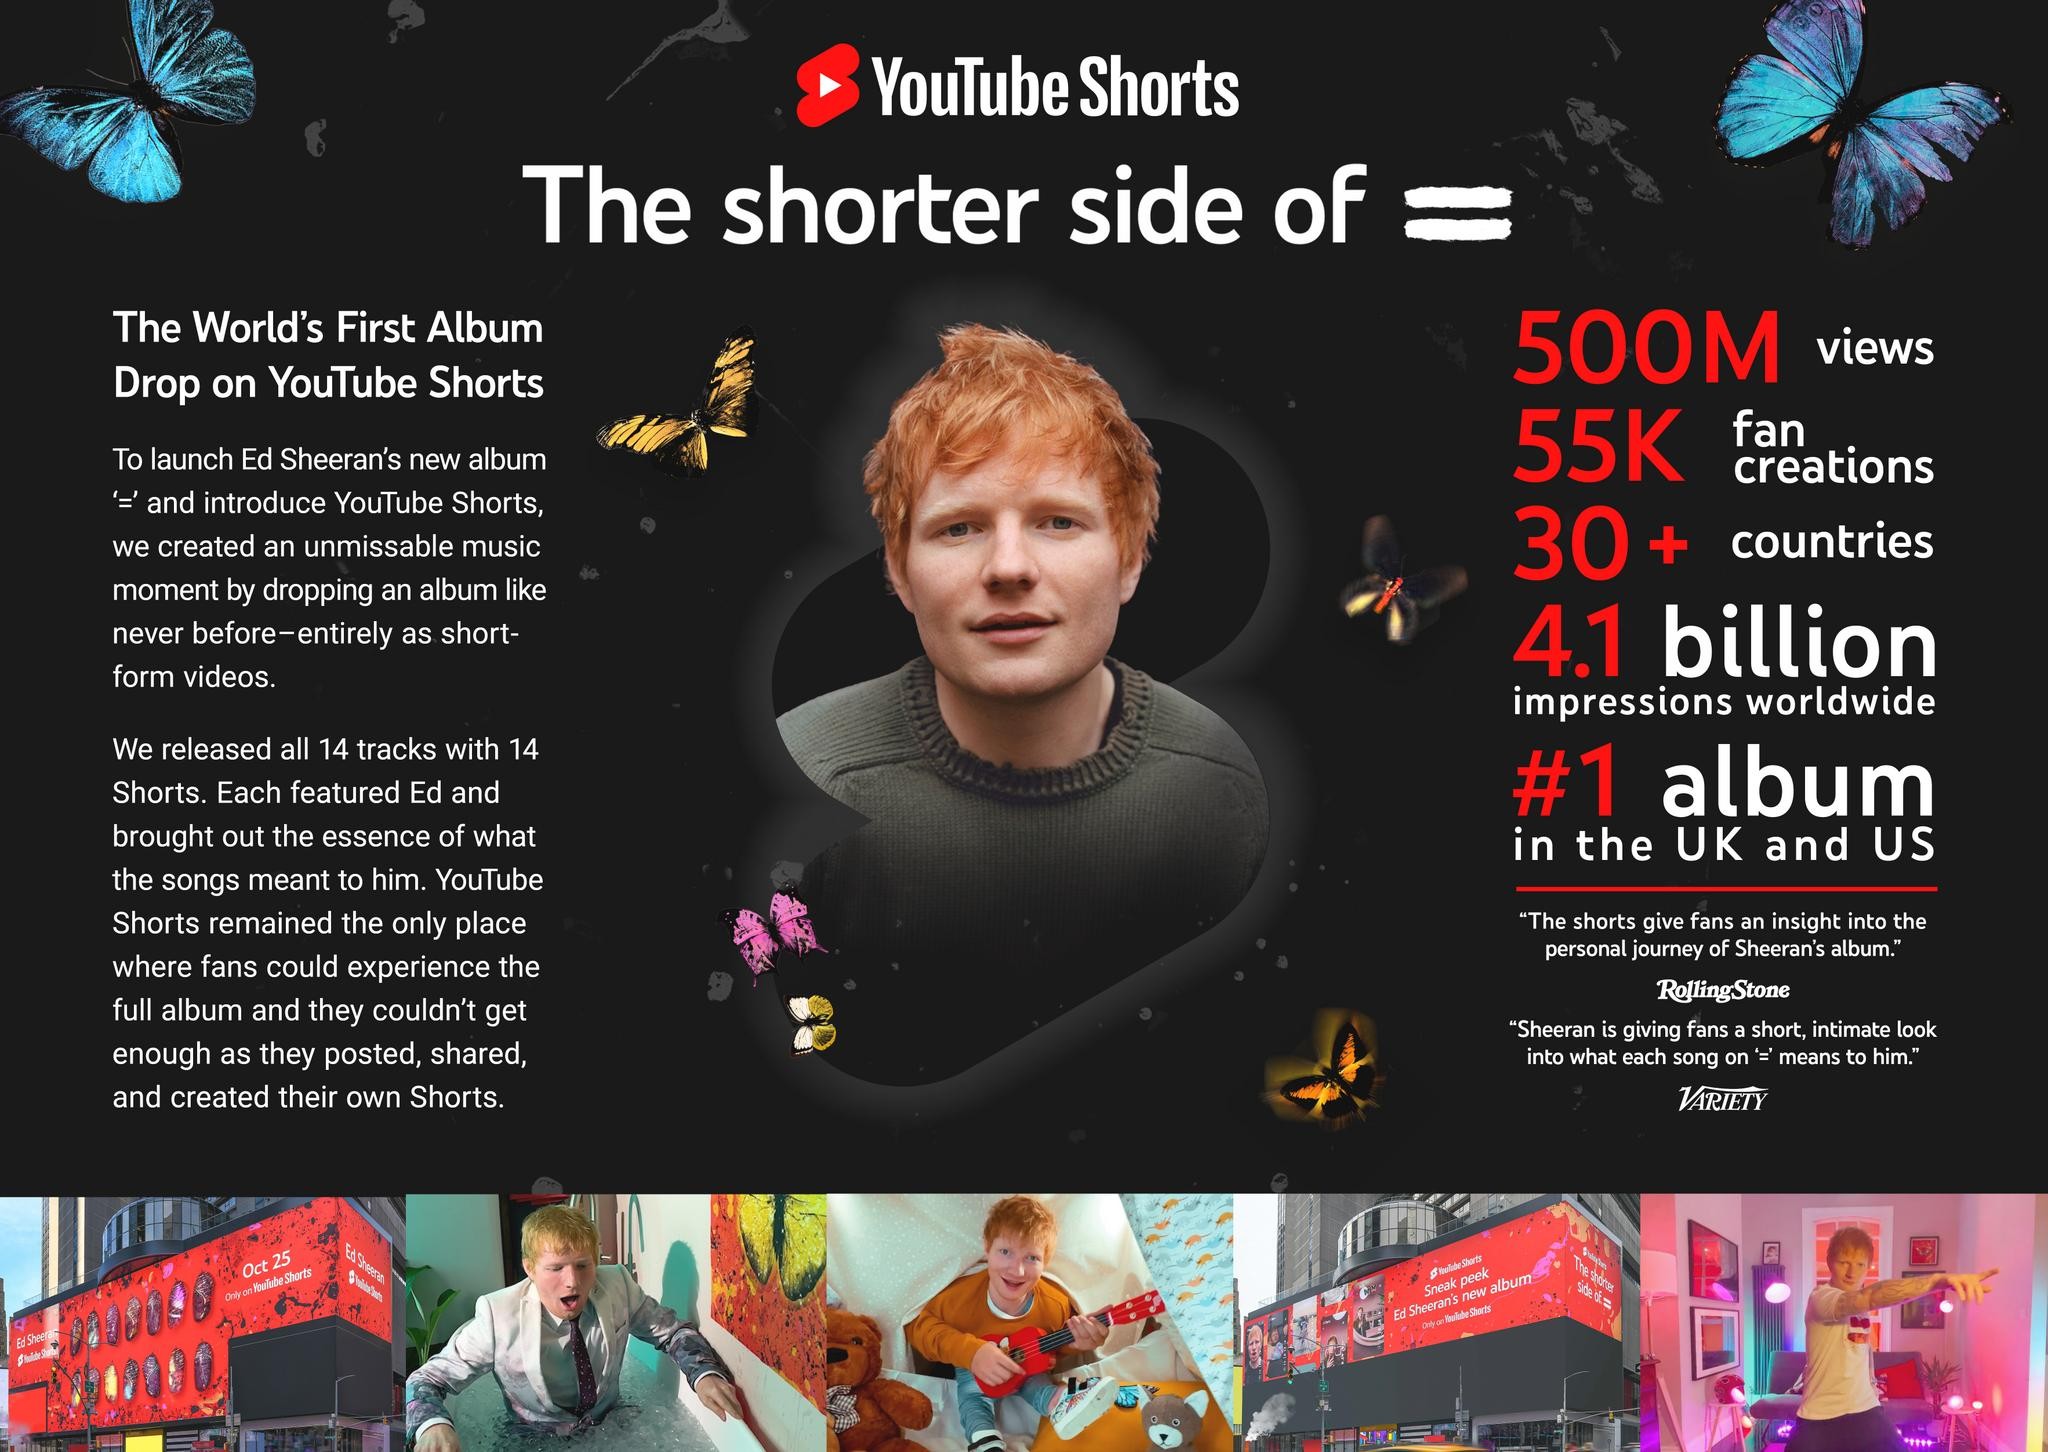 Ed Sheeran: The Shorter Side of "="